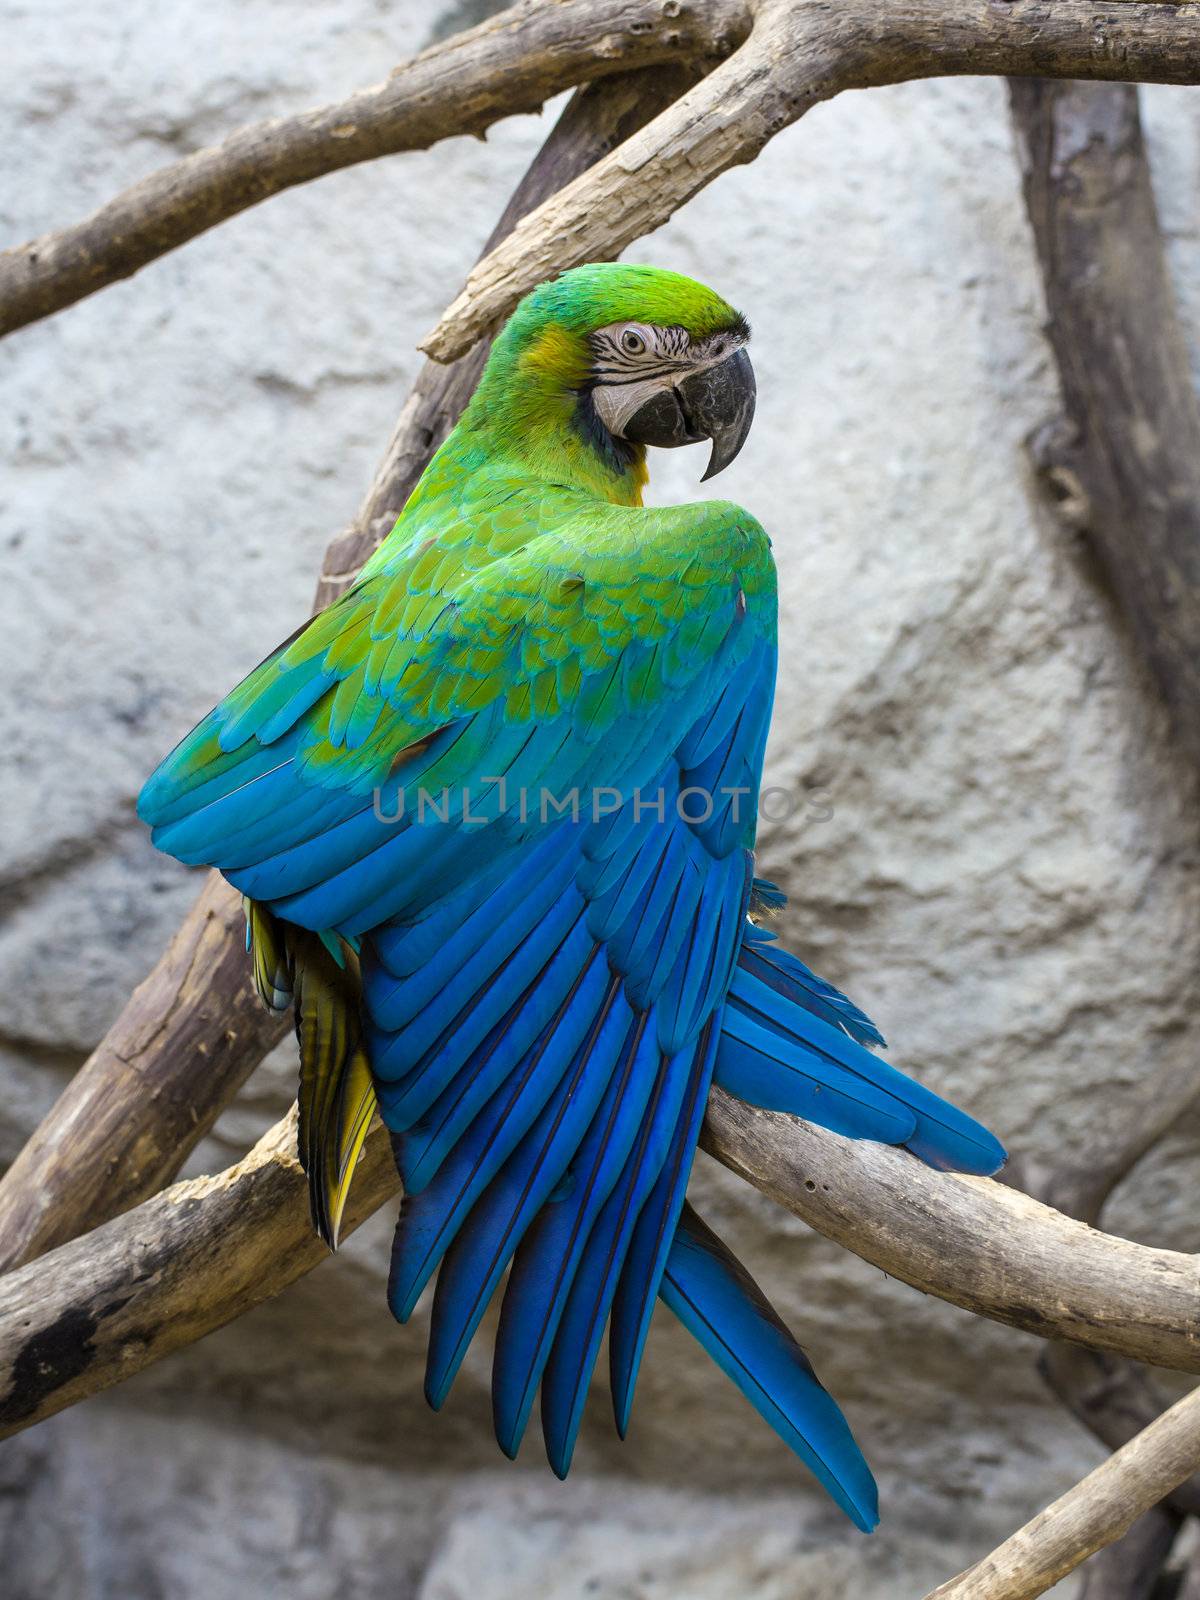 Blue and Gold macaw, Scientific name "Ara ararauna" bird by FrameAngel